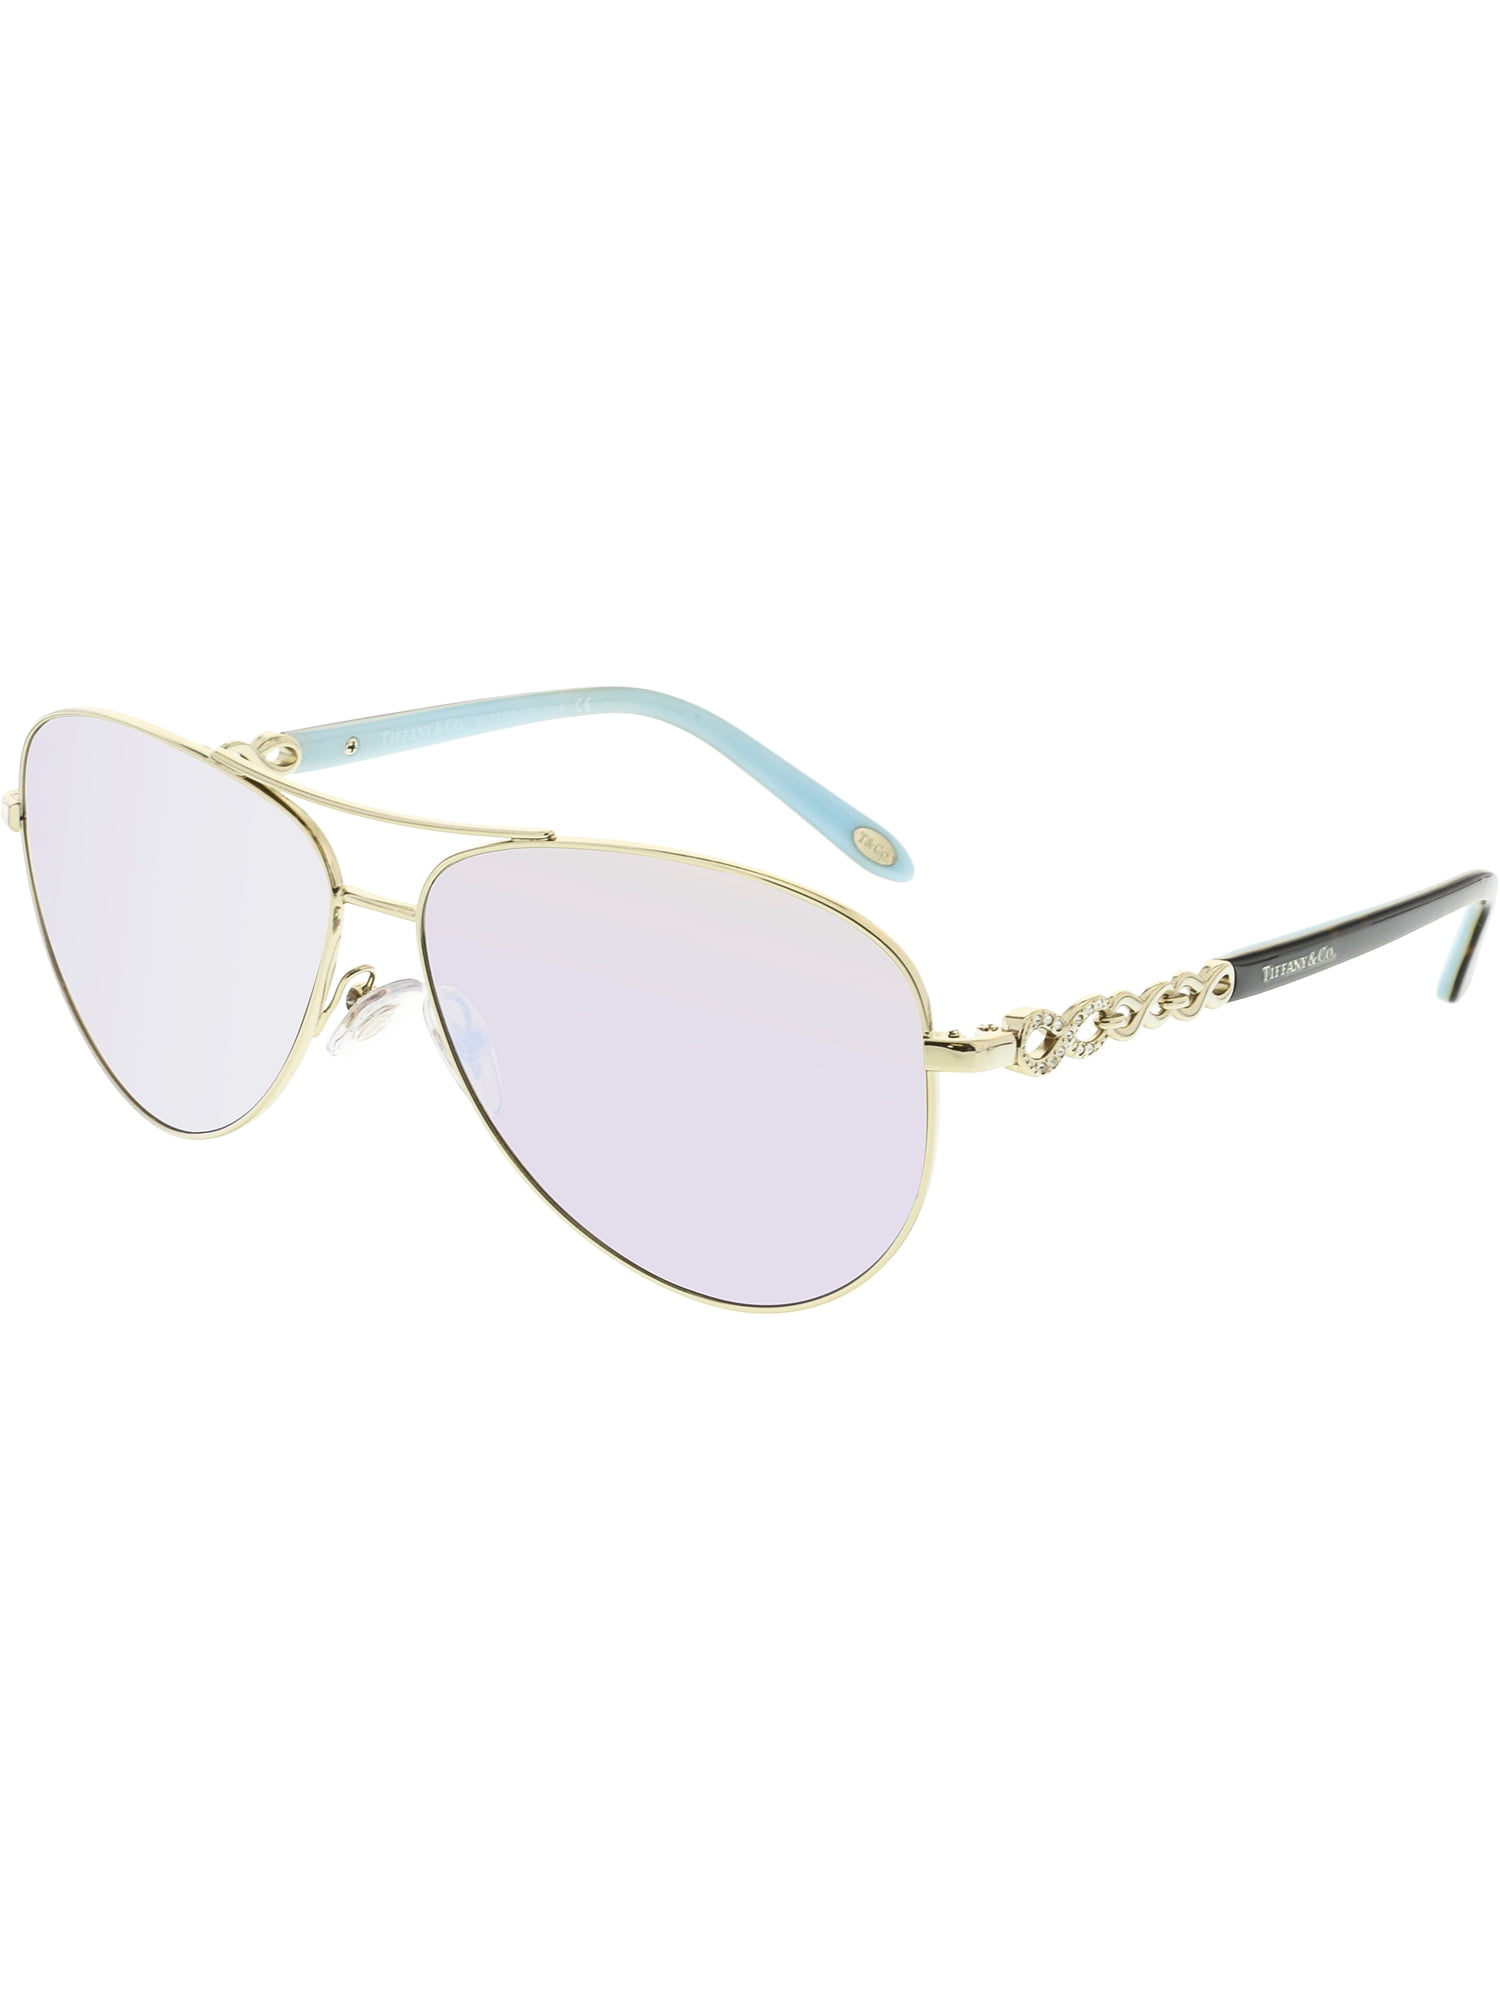 tiffany women's aviator sunglasses